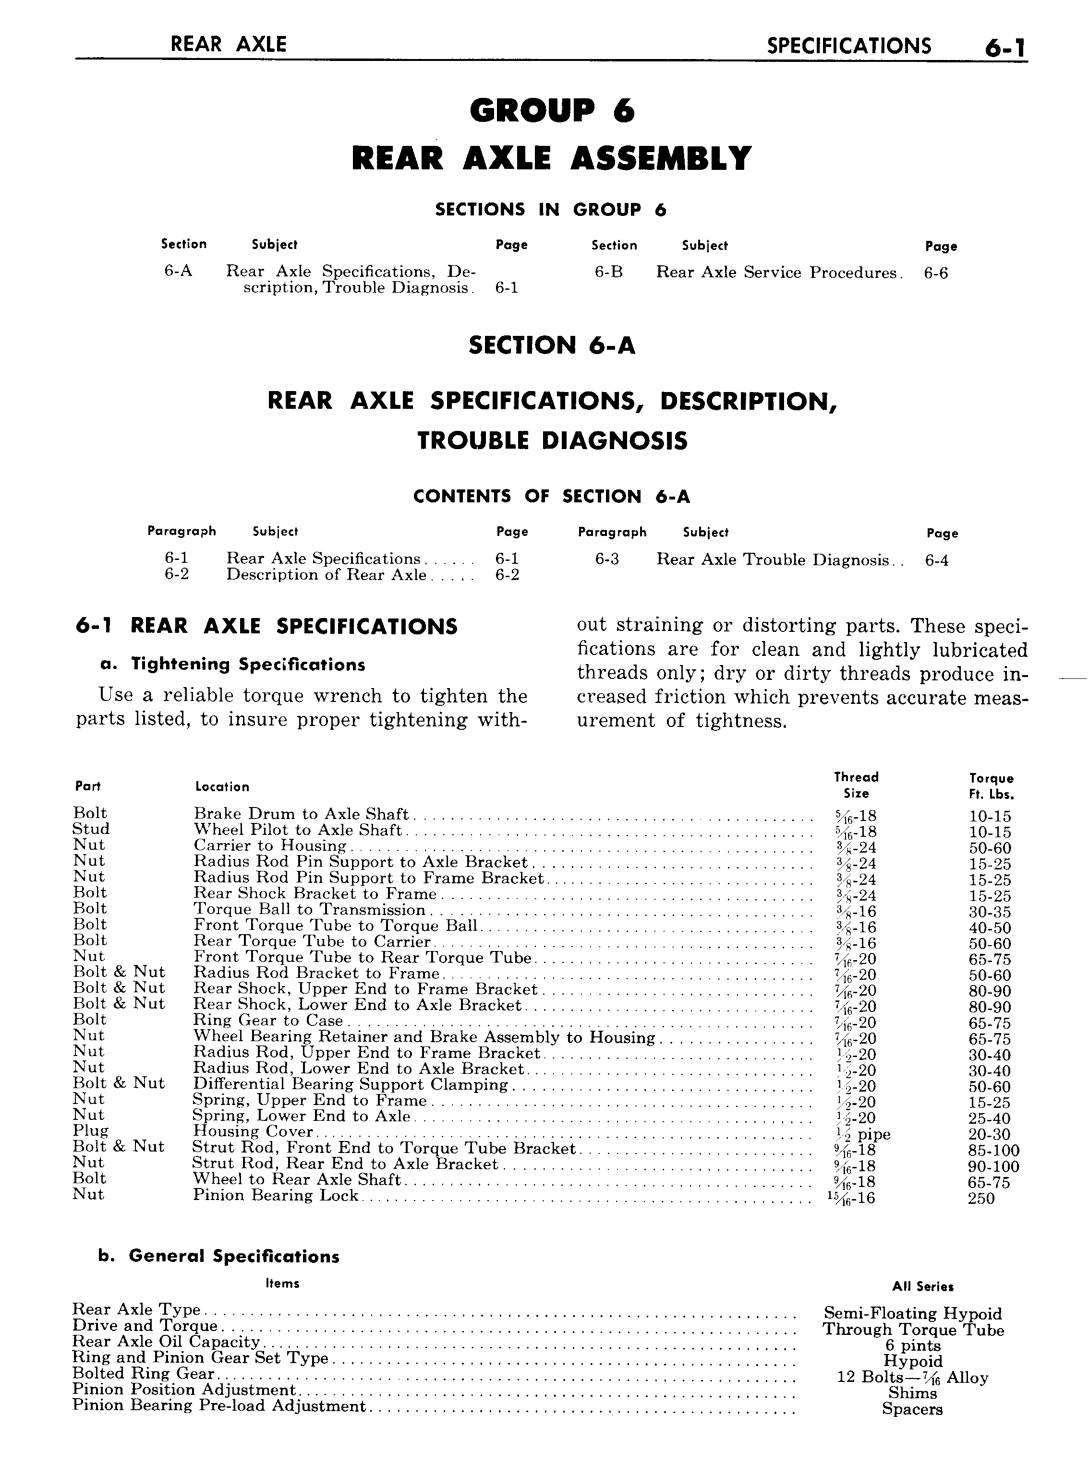 n_07 1957 Buick Shop Manual - Rear Axle-001-001.jpg